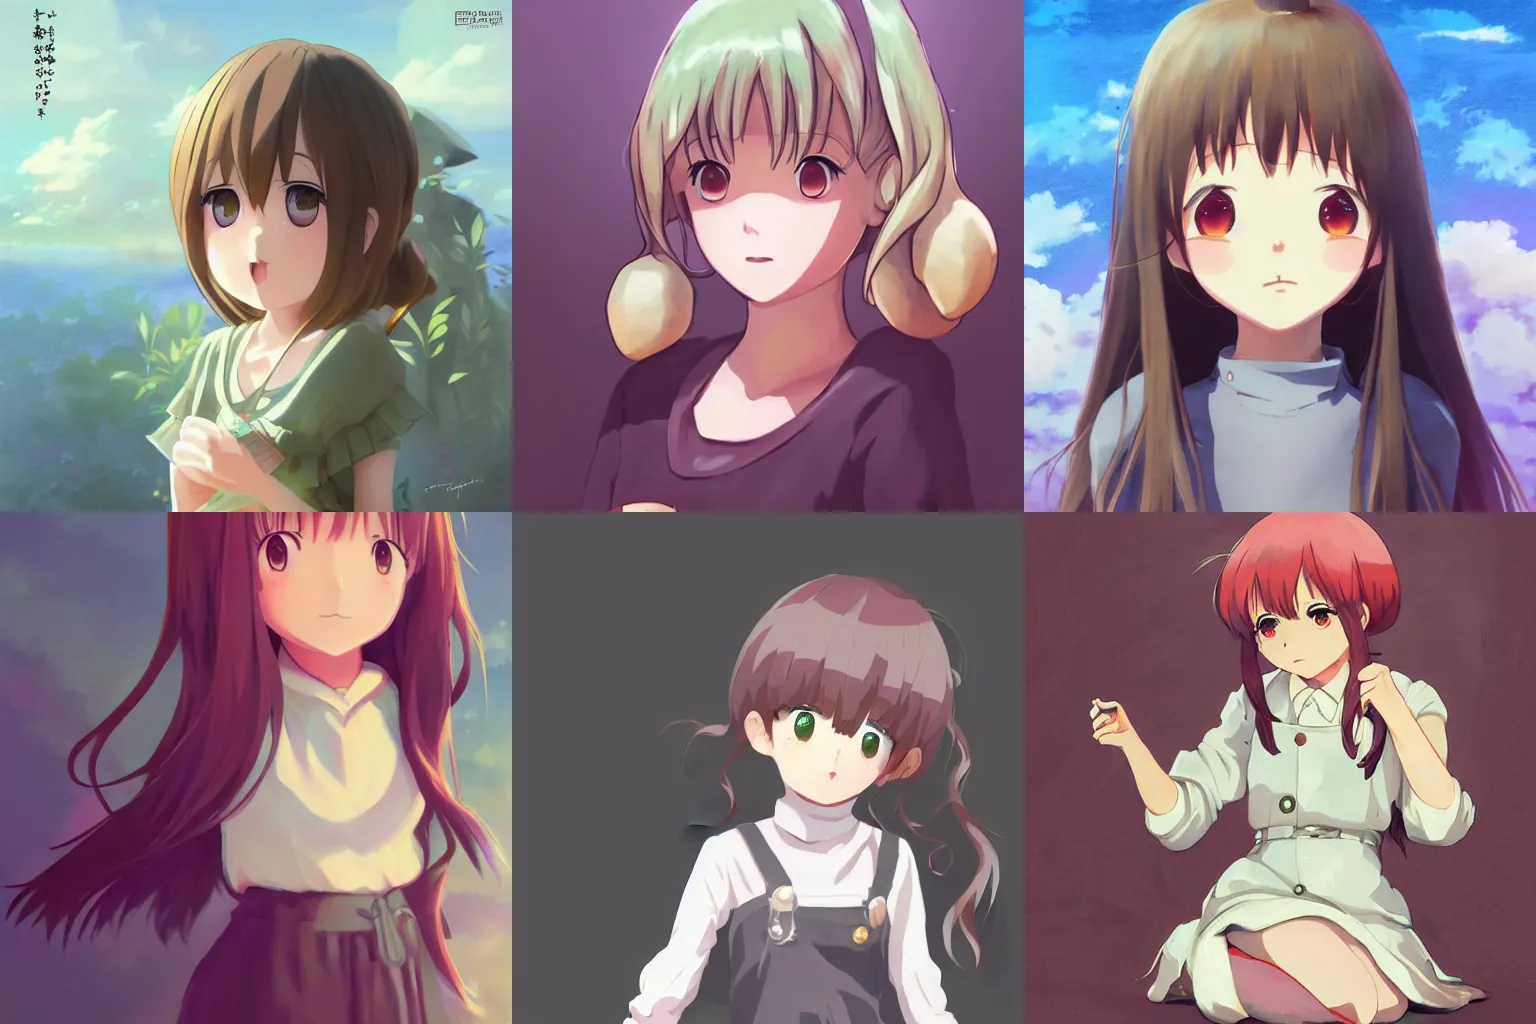 Prompt: A potato as an anime girl, digital painting, artstation, concept art, sharp focus, illustration, art by studio ghibli and Hayao Miyazaki